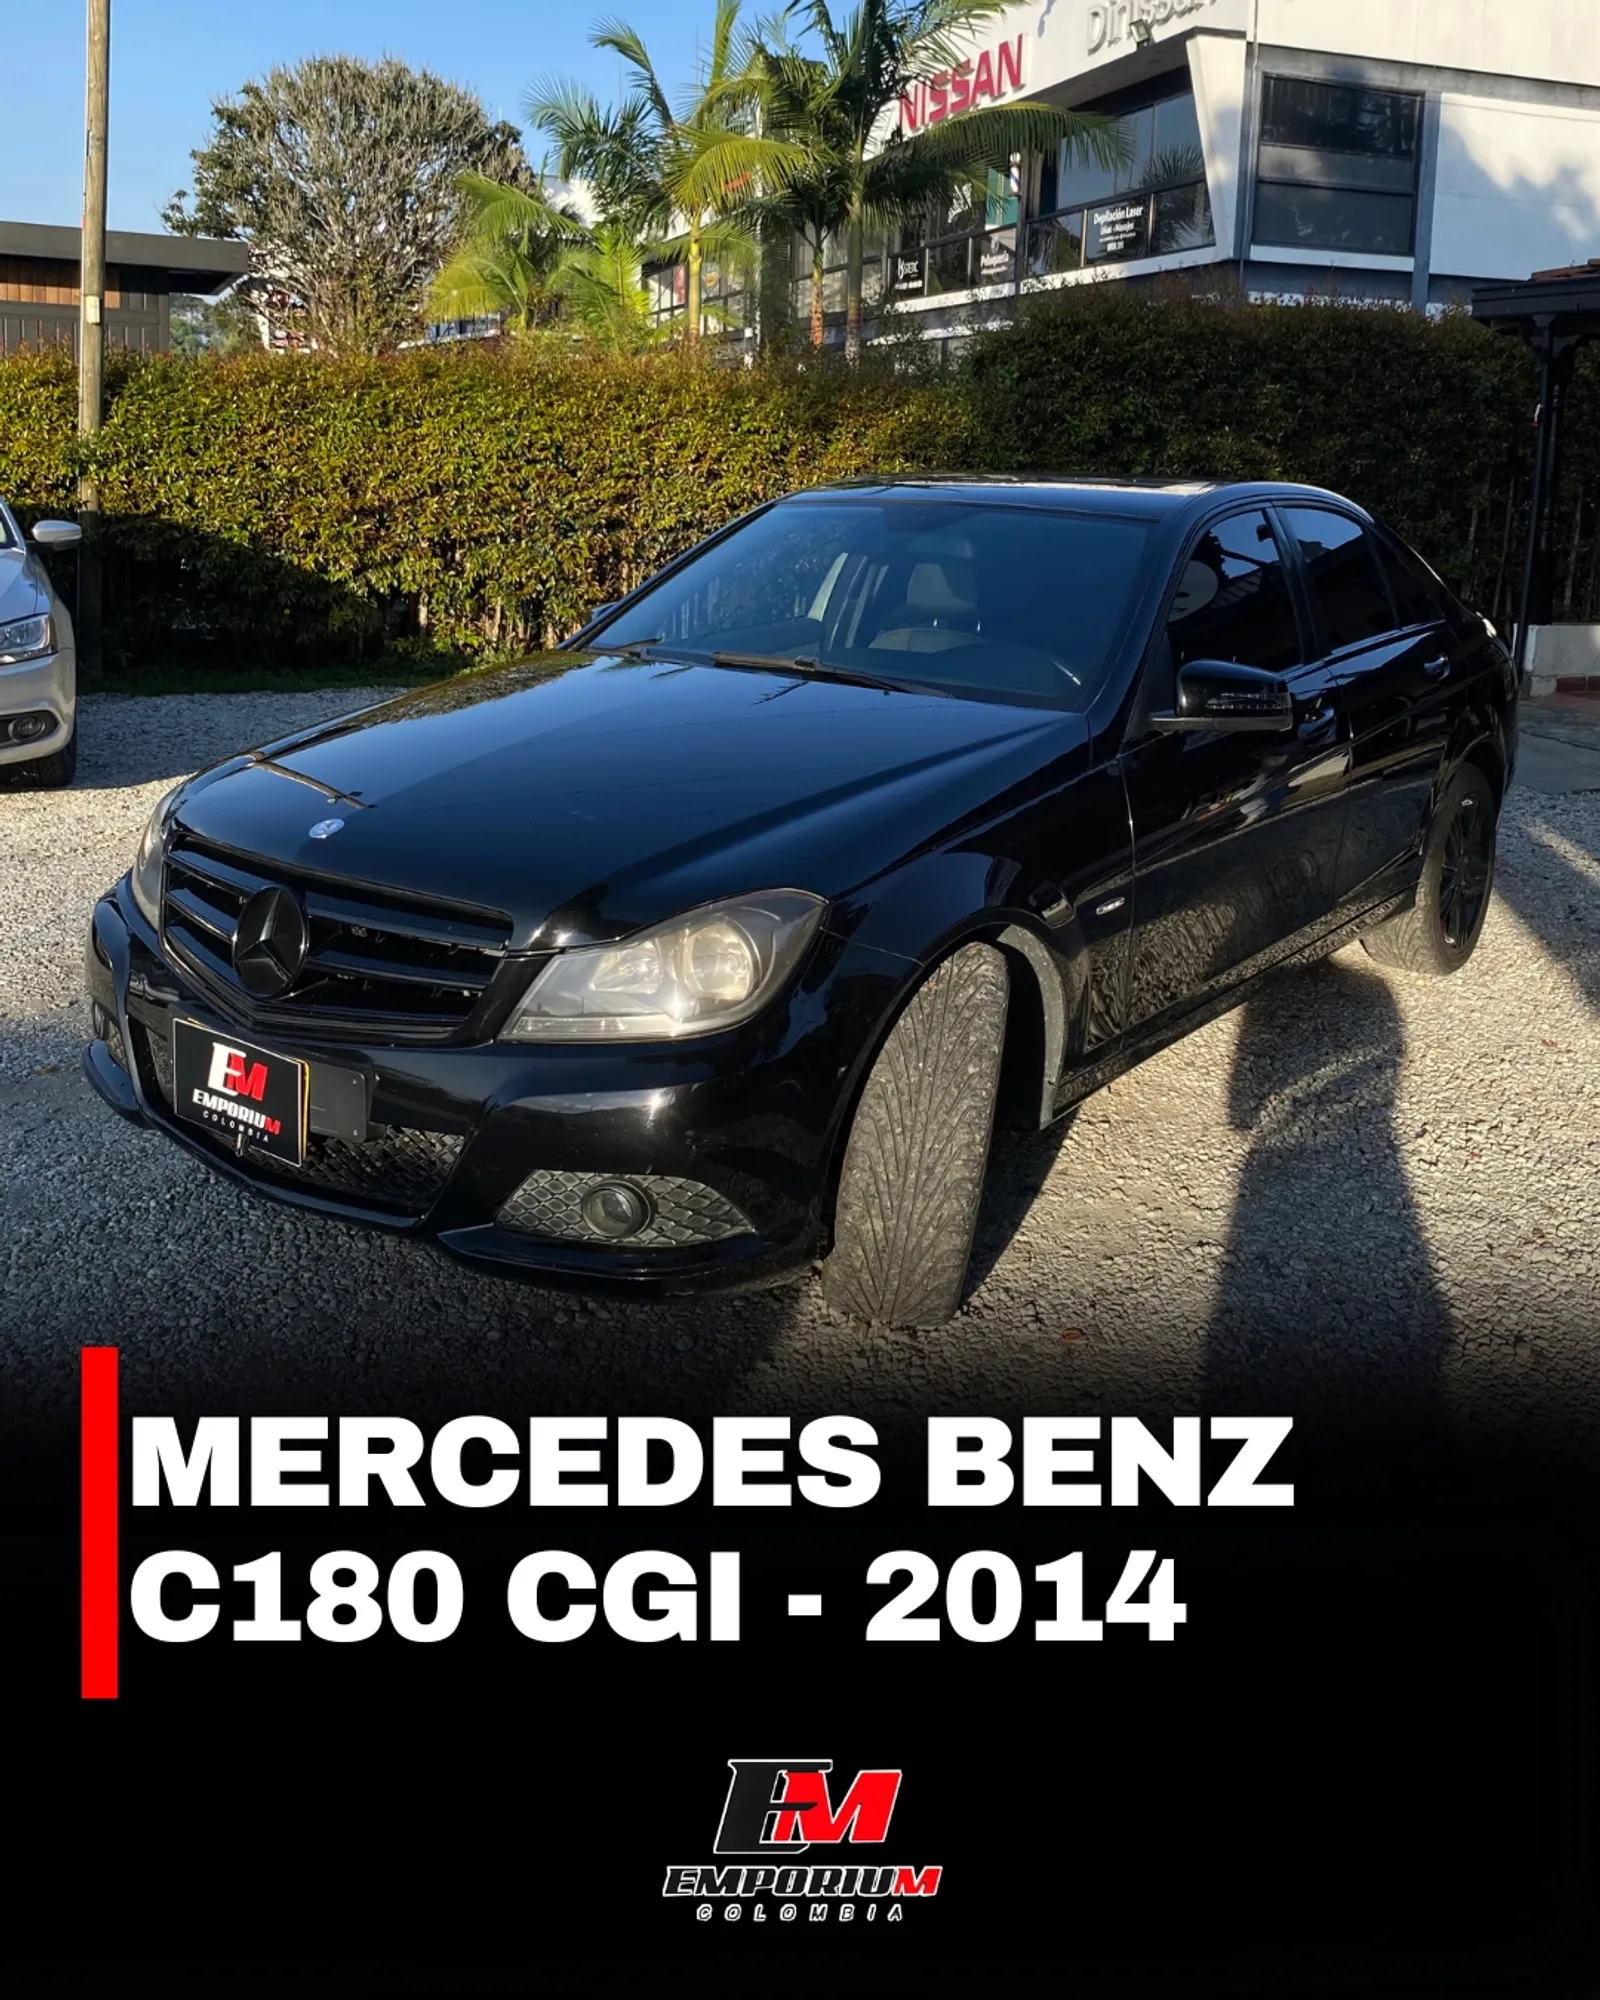 Mercedes Benz C180 CGI 2014